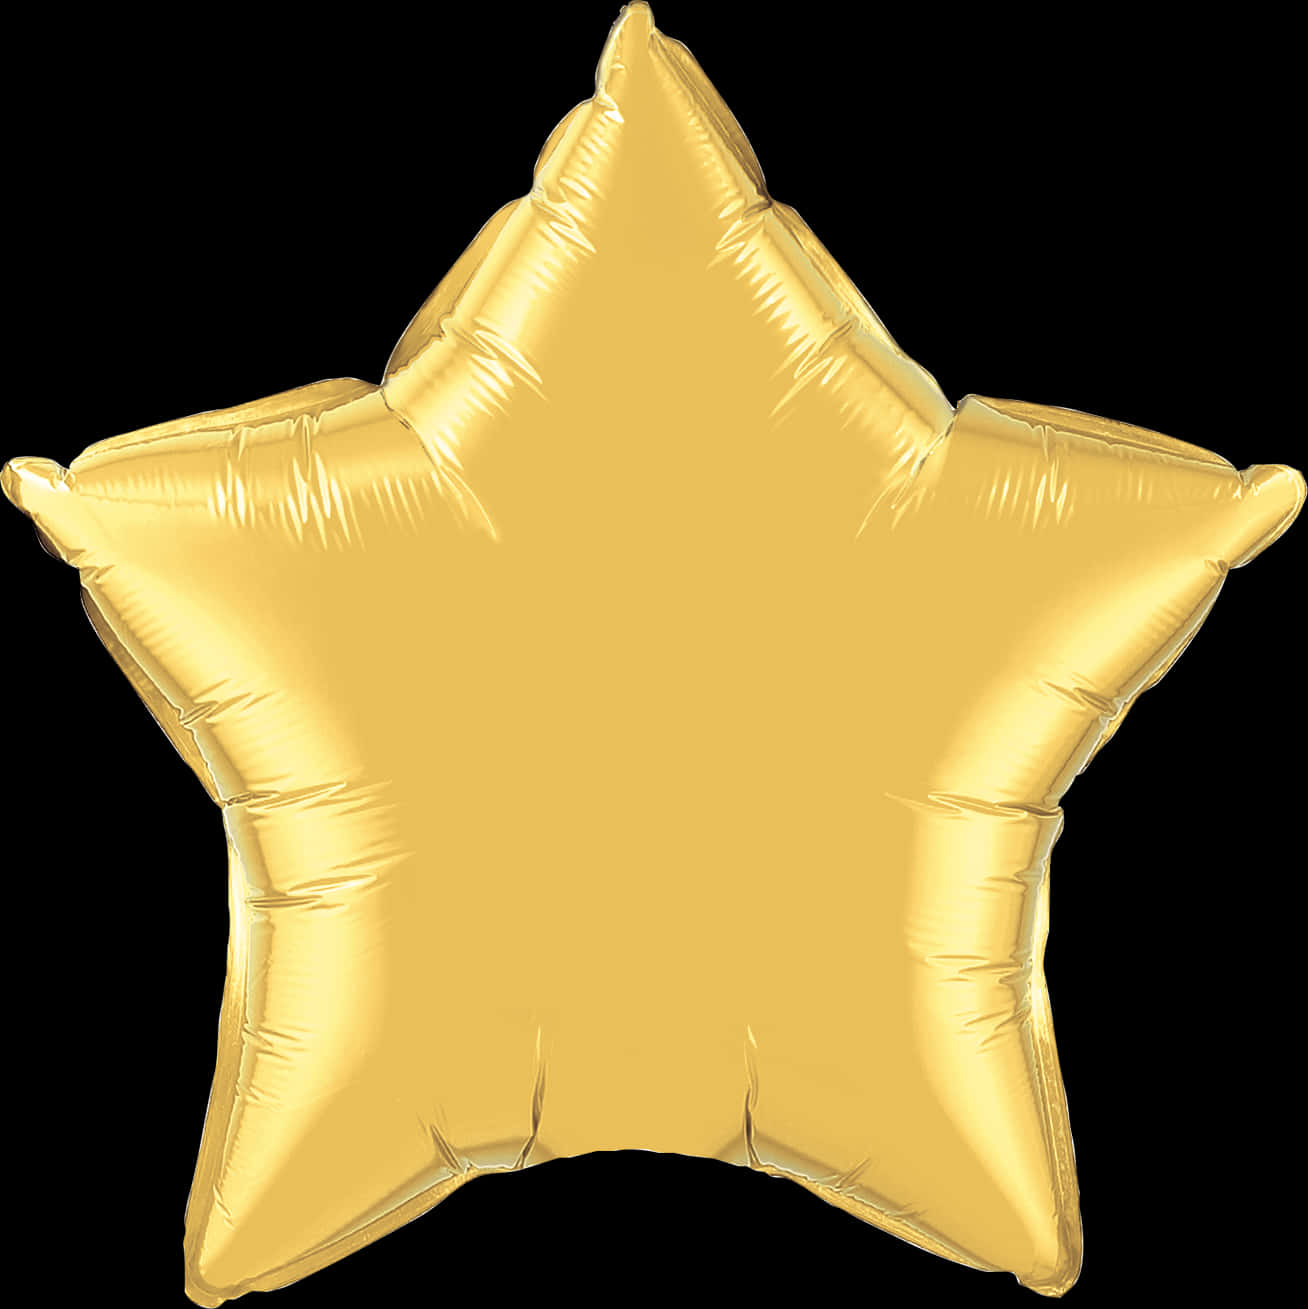 A Gold Star Shaped Balloon